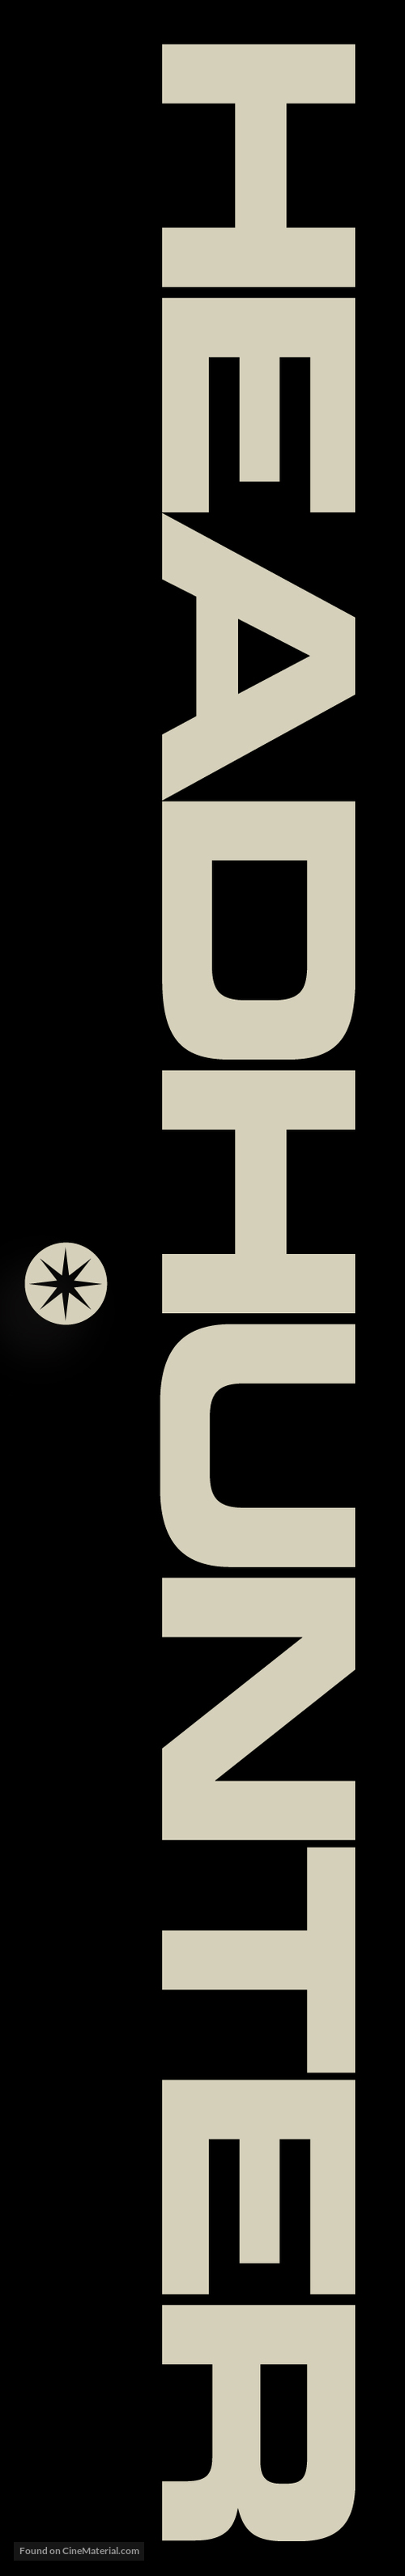 Headhunter - Danish Logo